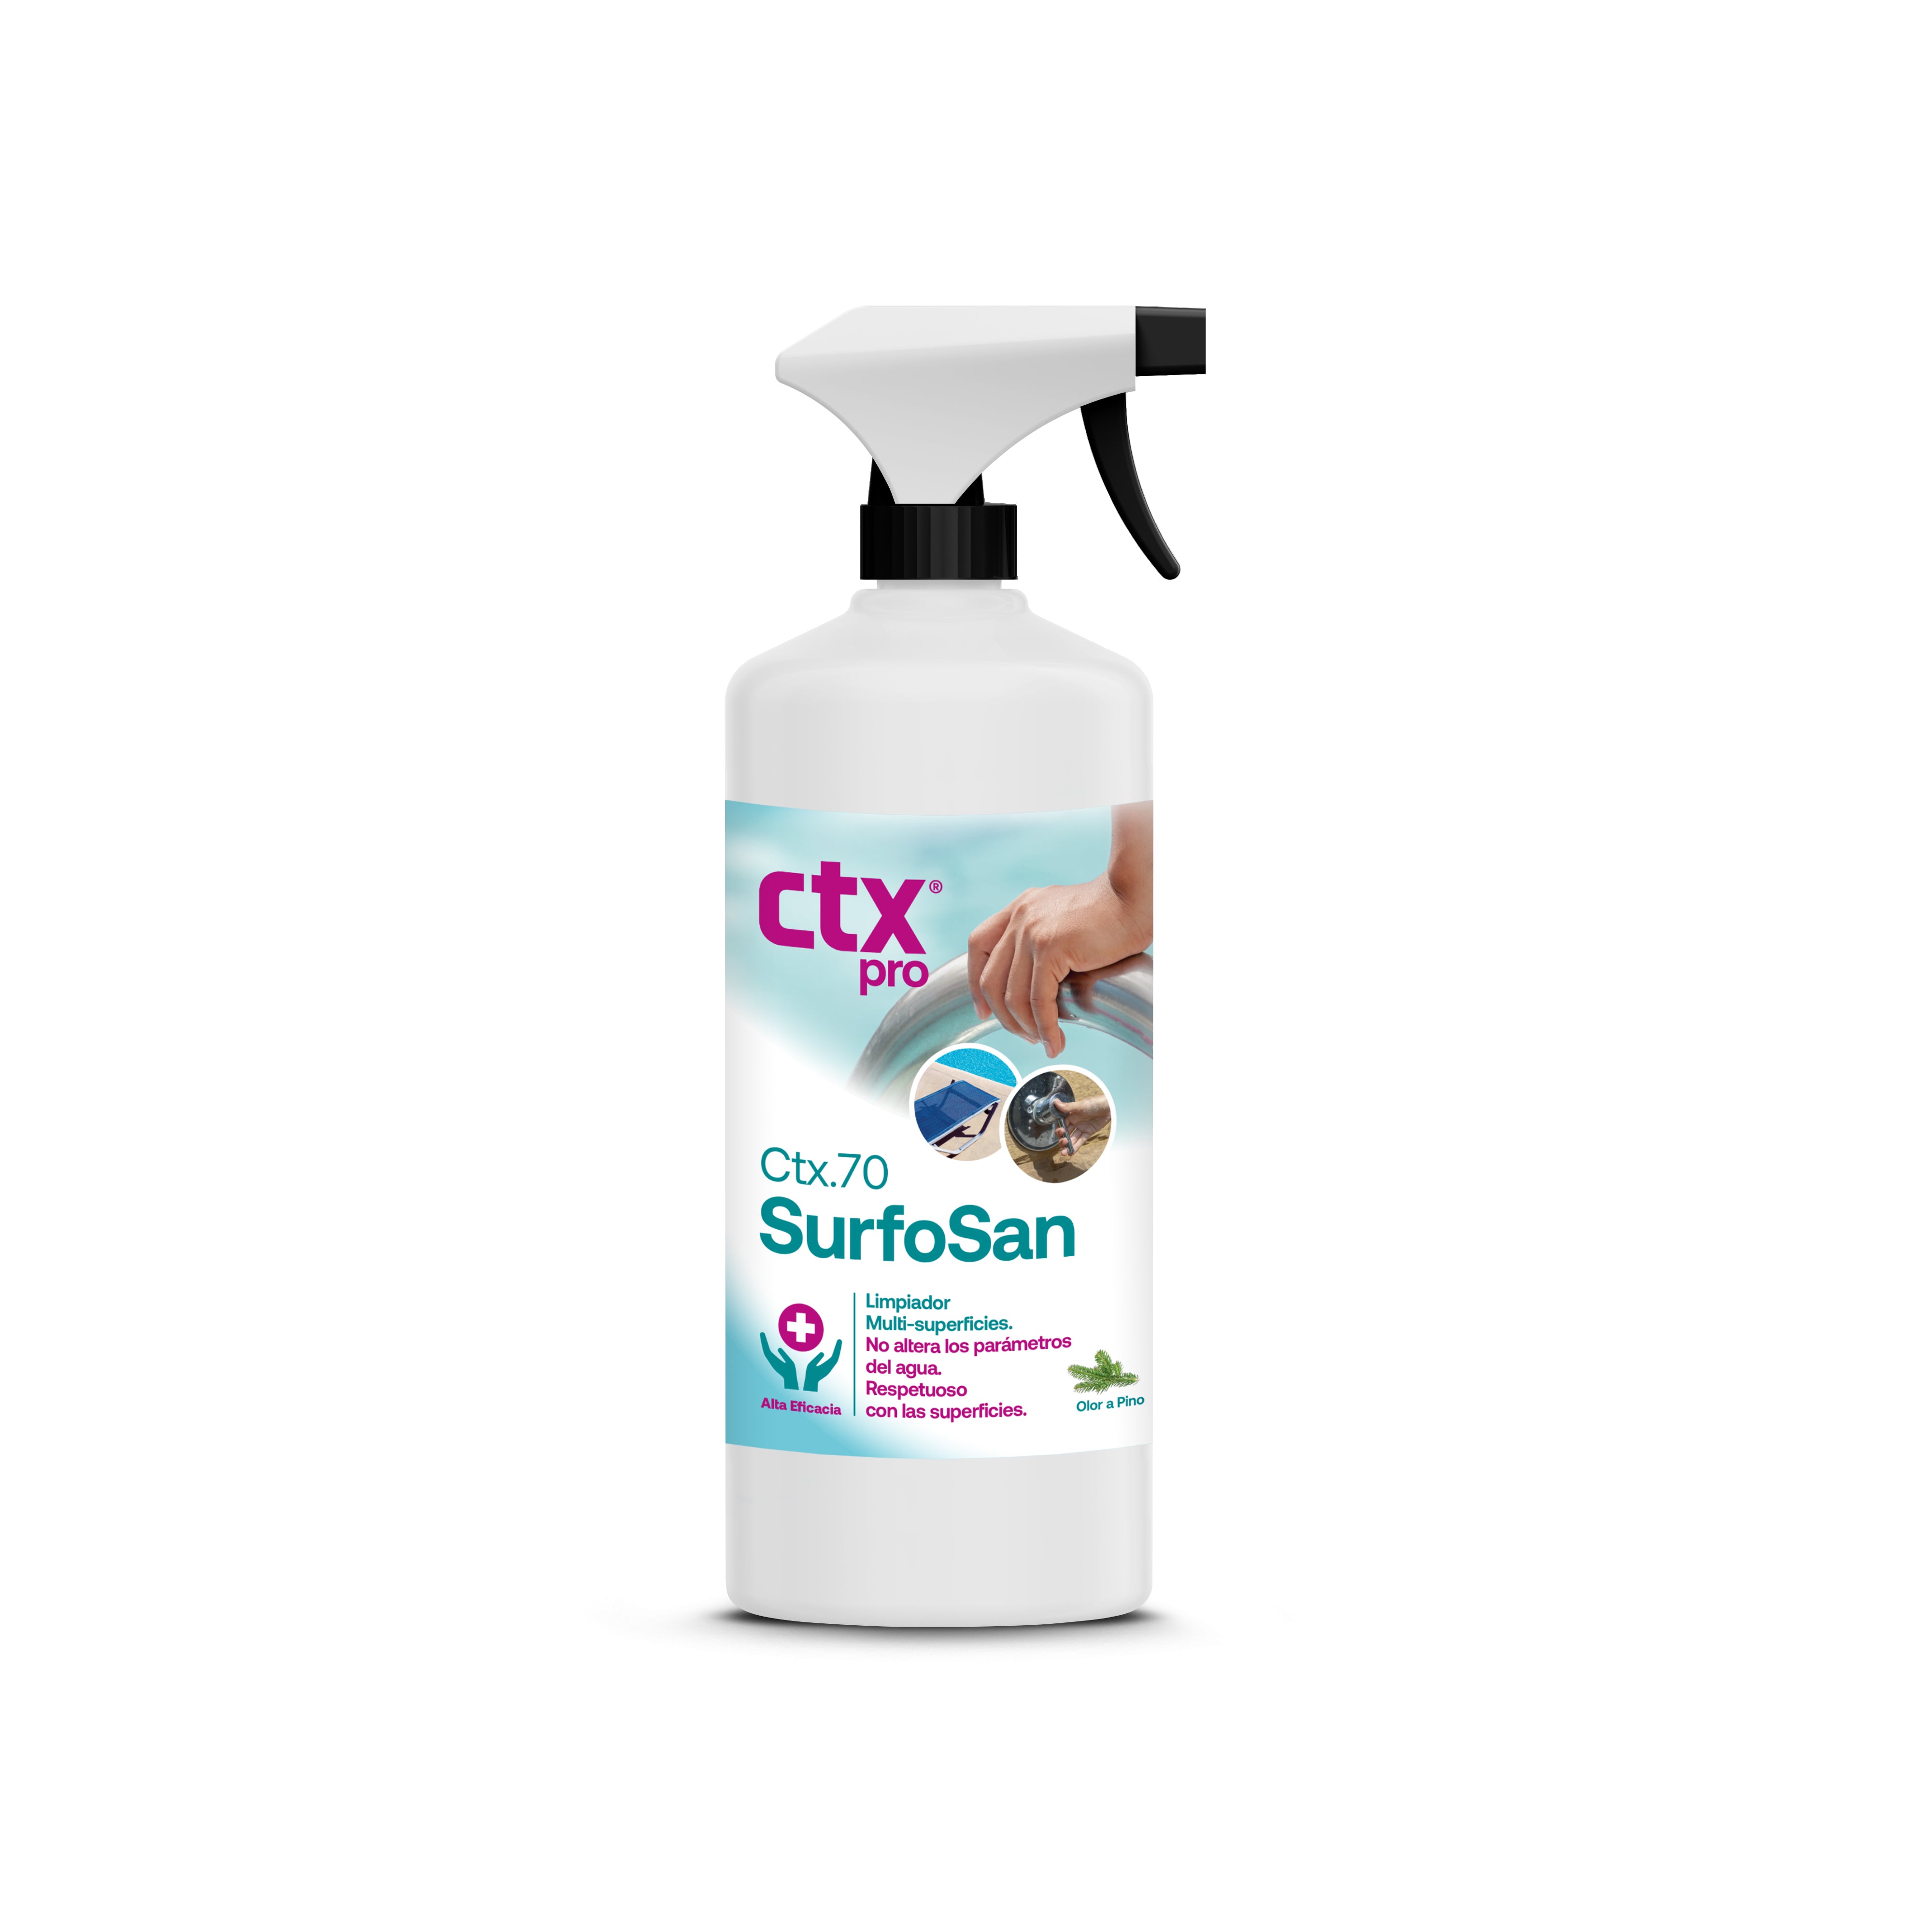 CTX-70 Surfosan - Multi-surface cleaner